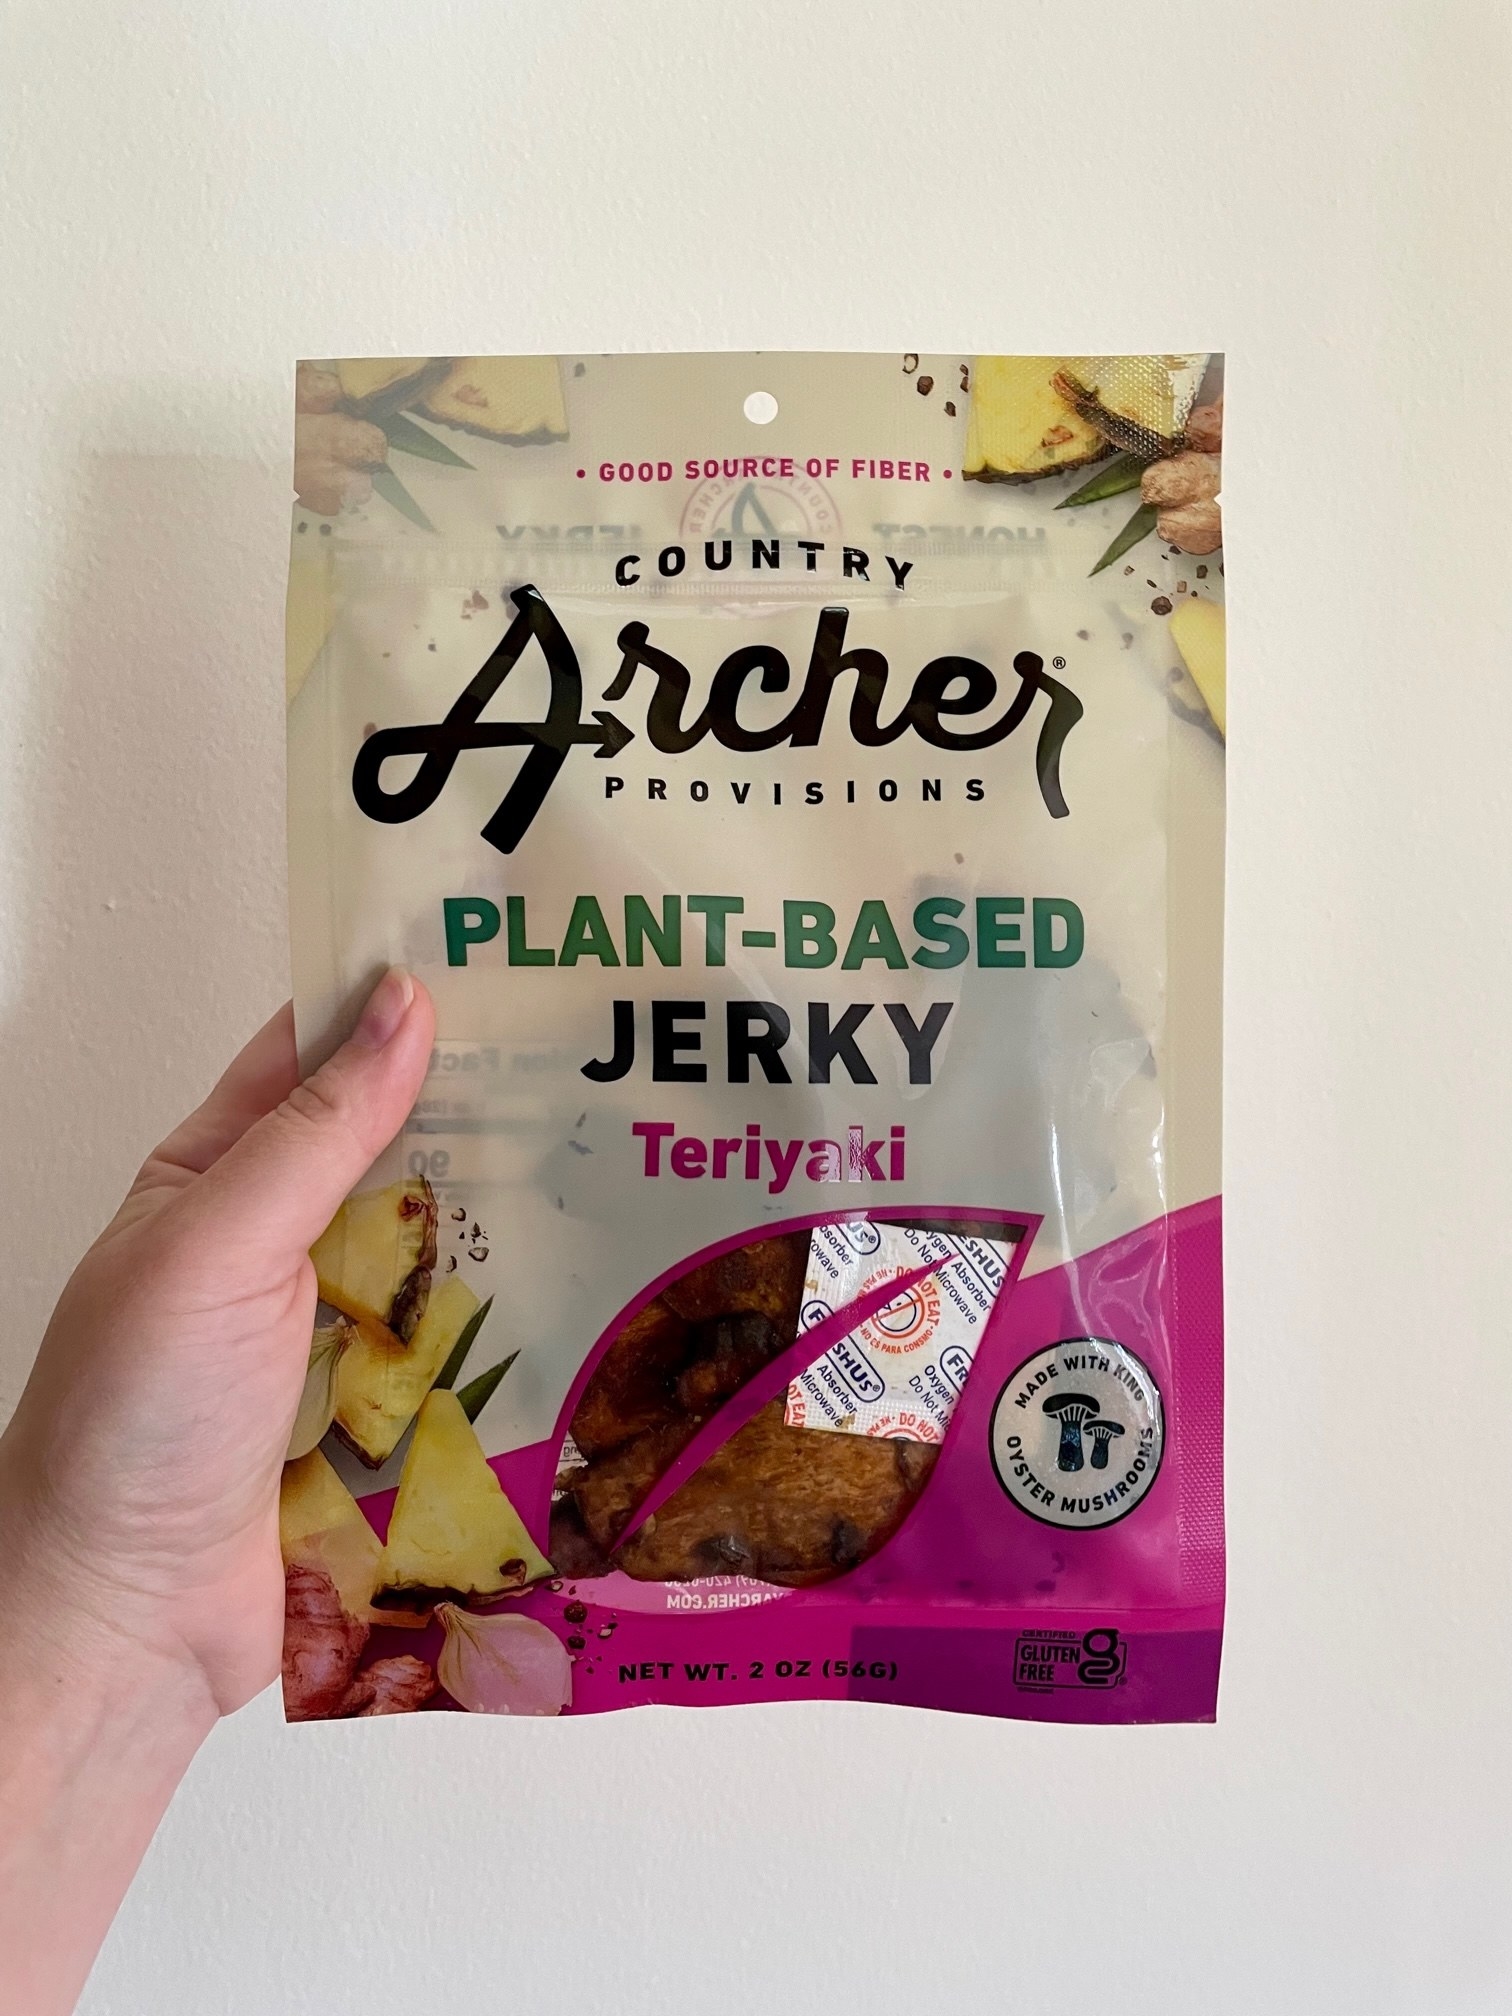 A bag of the plant-based jerky in teriyaki flavor